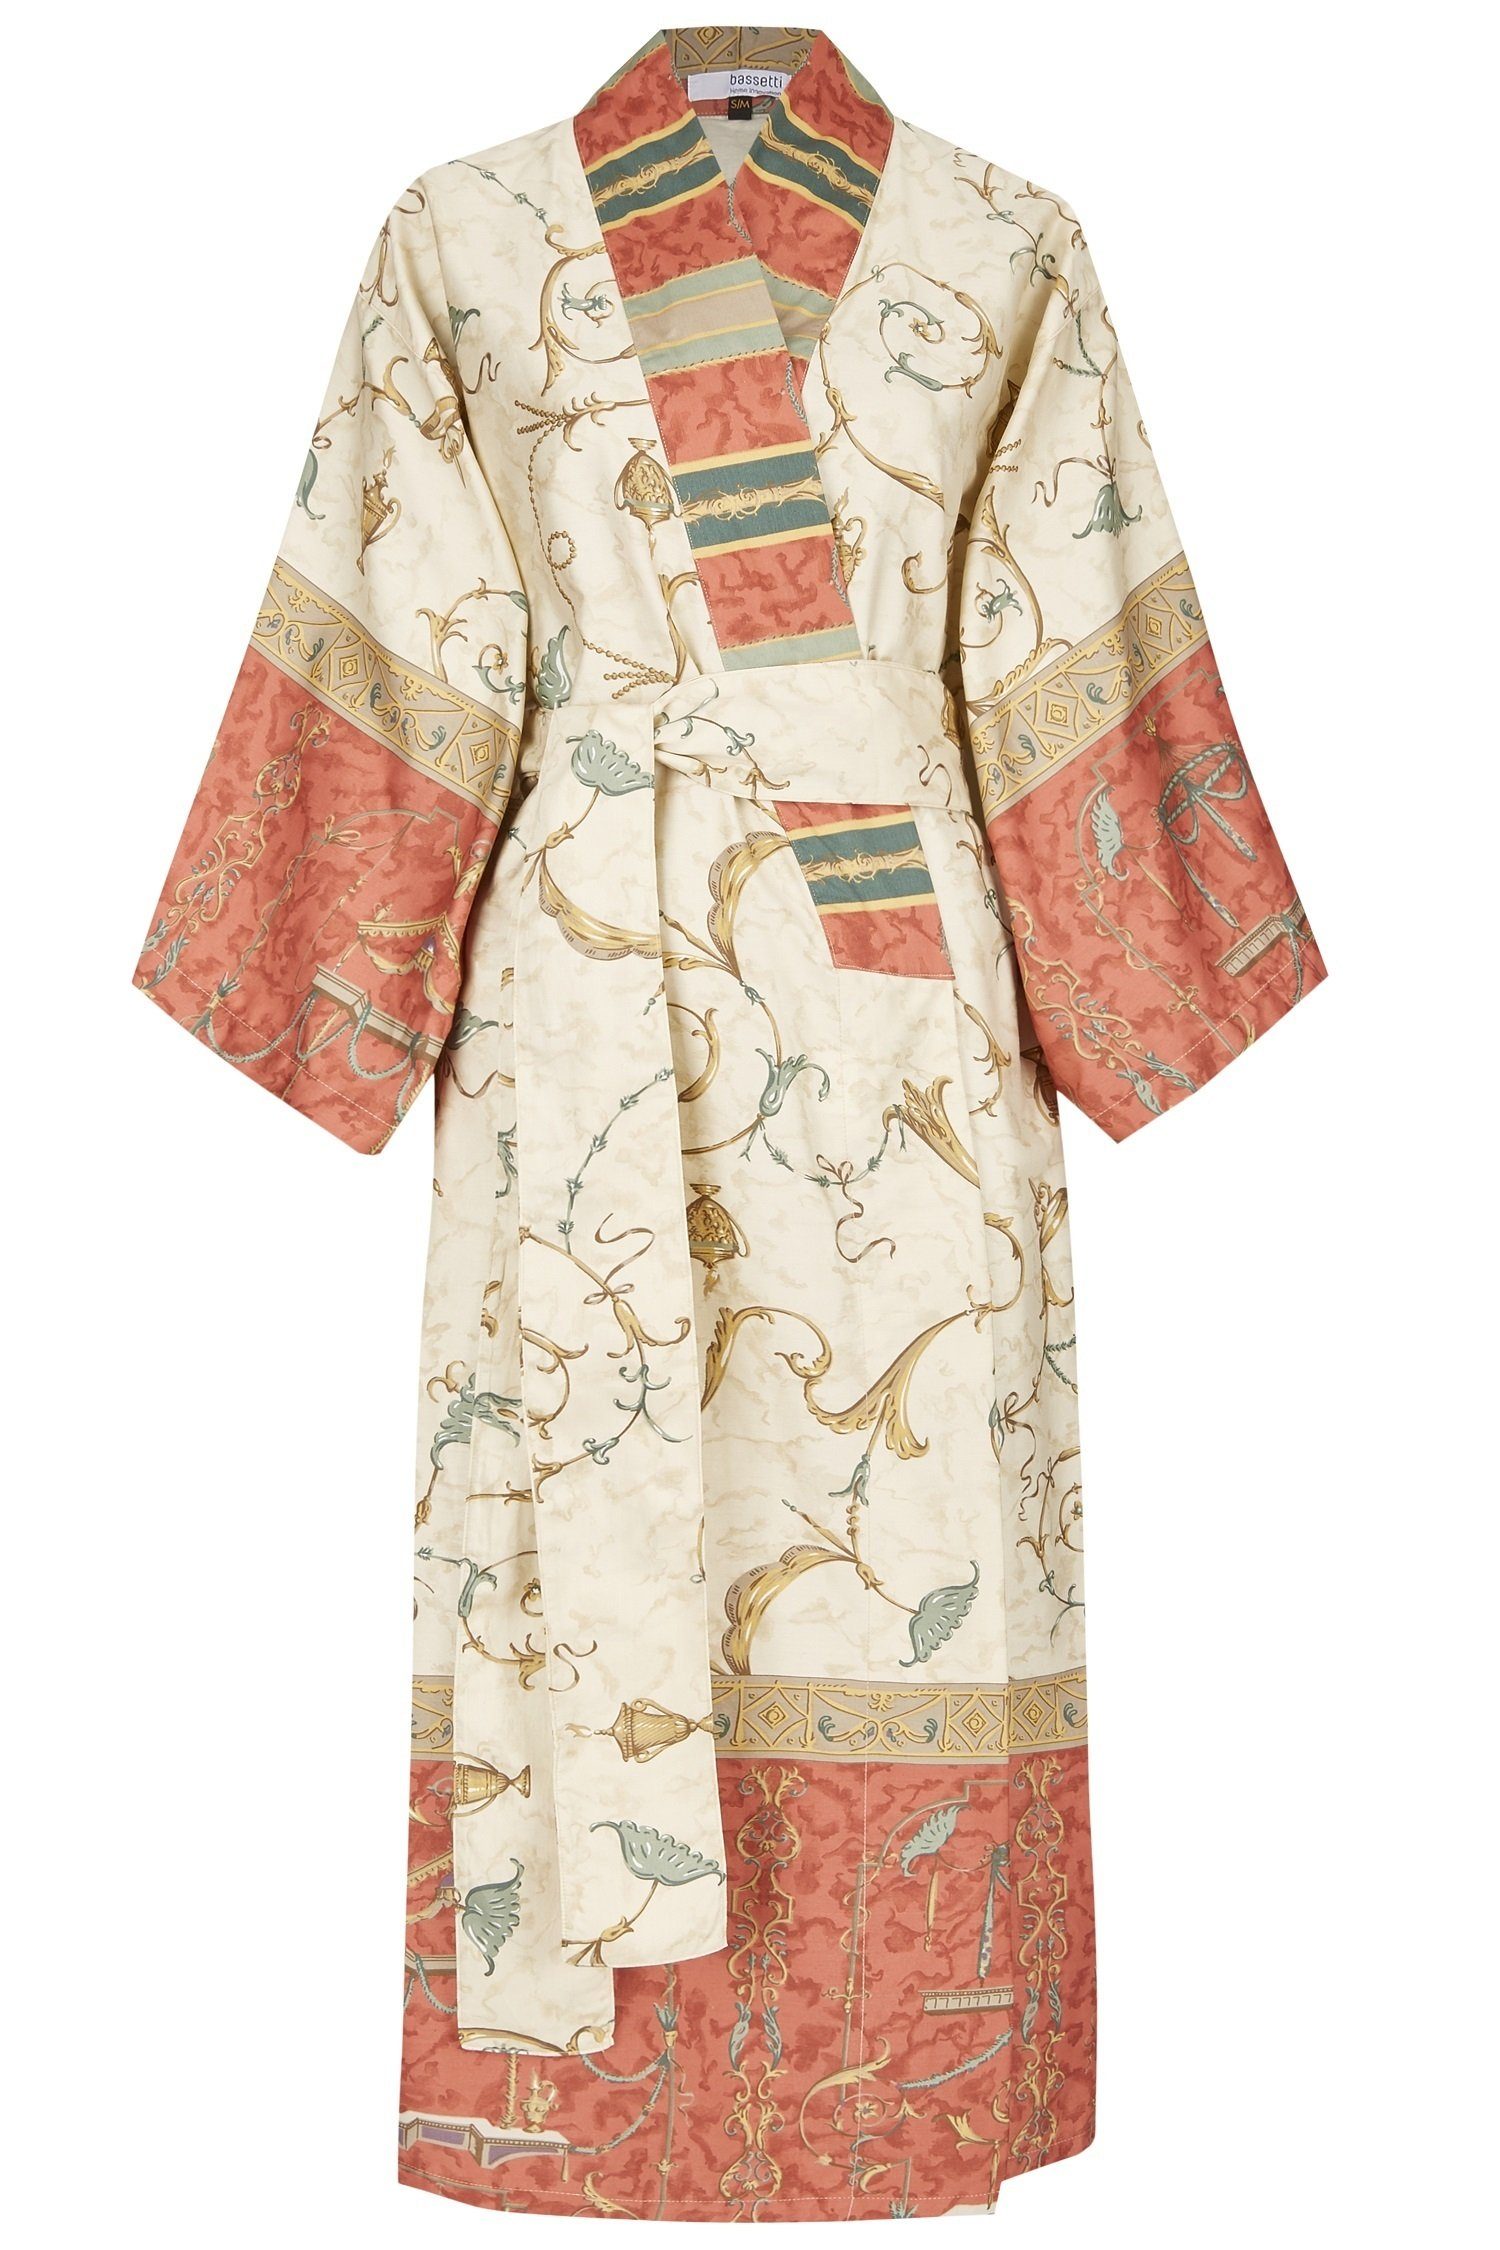 Baumwolle Bassetti aus Kimono satinierter knöchelfrei, Gürtel, OPLONTIS, rot Baumwolle,